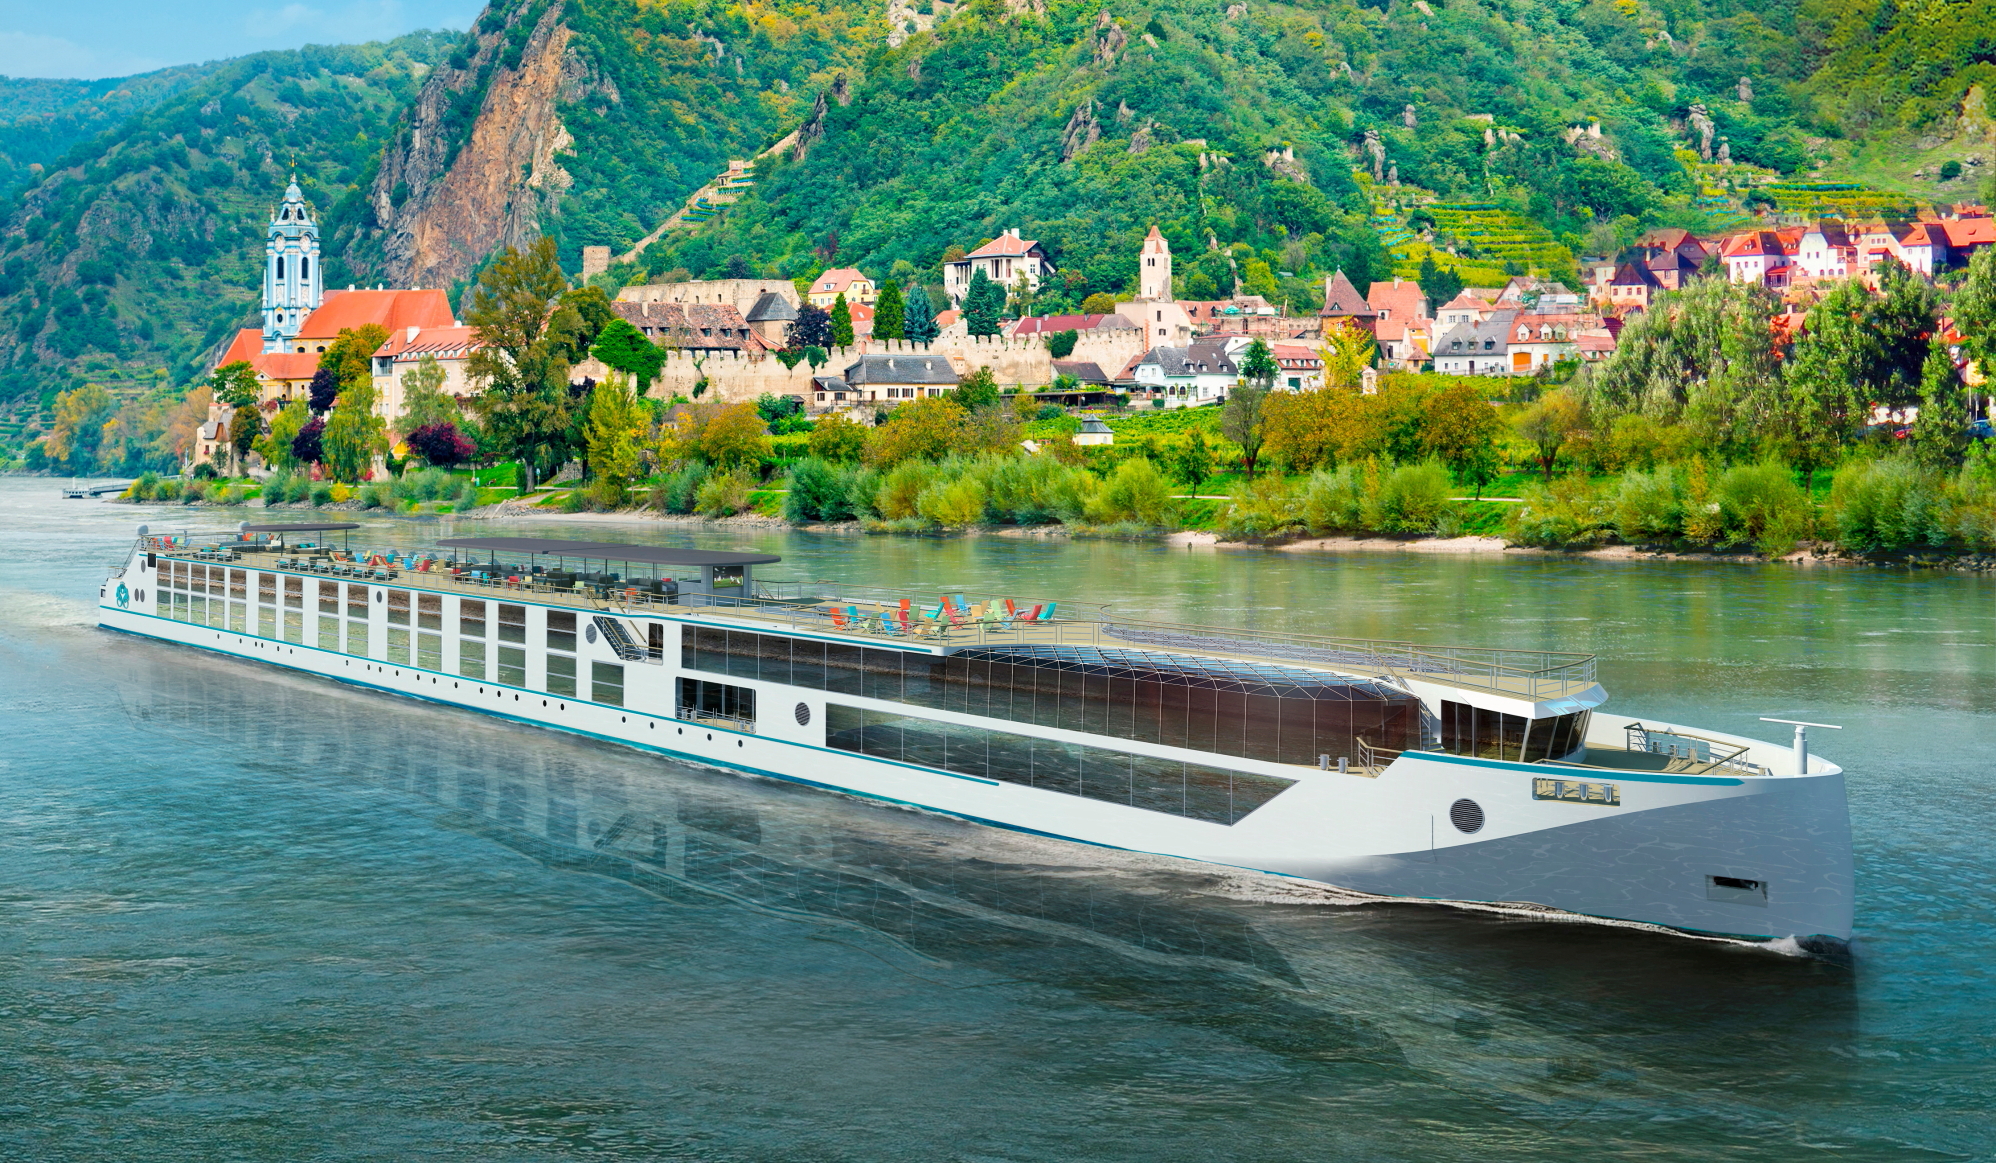 Crystal’s new “Rhine Class” river ship - Crystal Bach